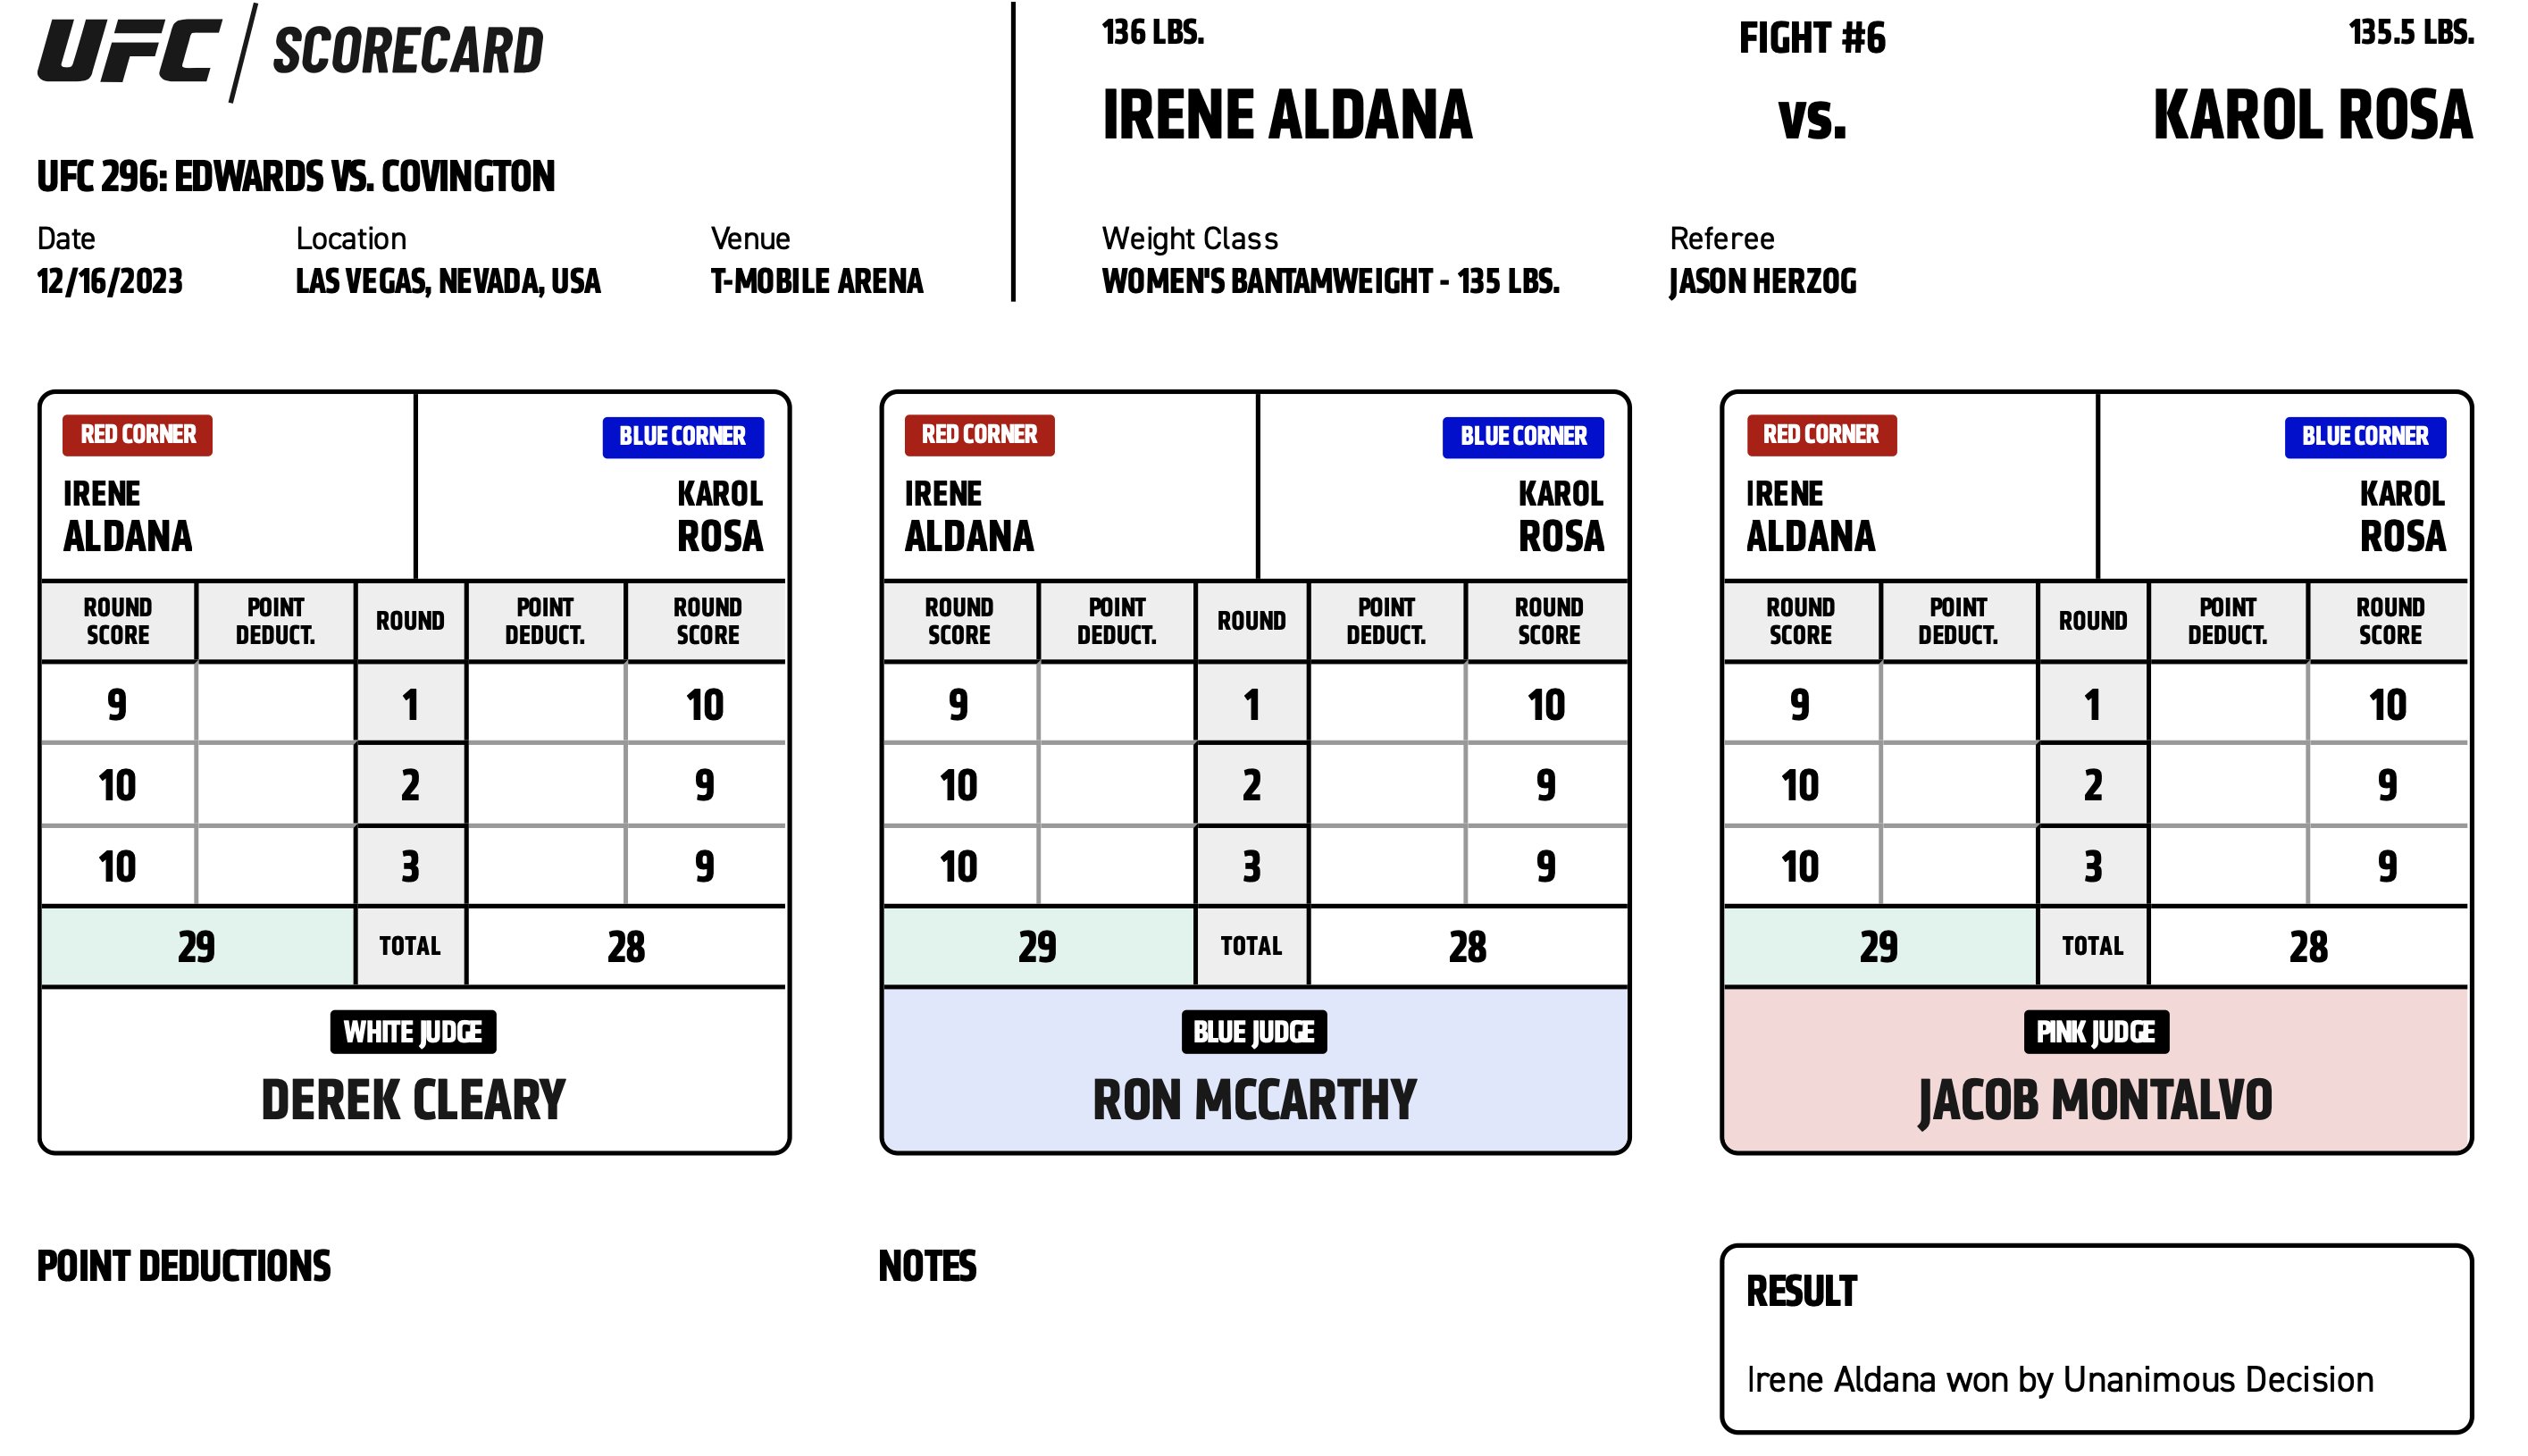 Scorecard : Combat Categorie - Poids Coqs : Irene Aldana vs. Karol Rosa - UFC 296 - EDWARDS VS. COVINGTON